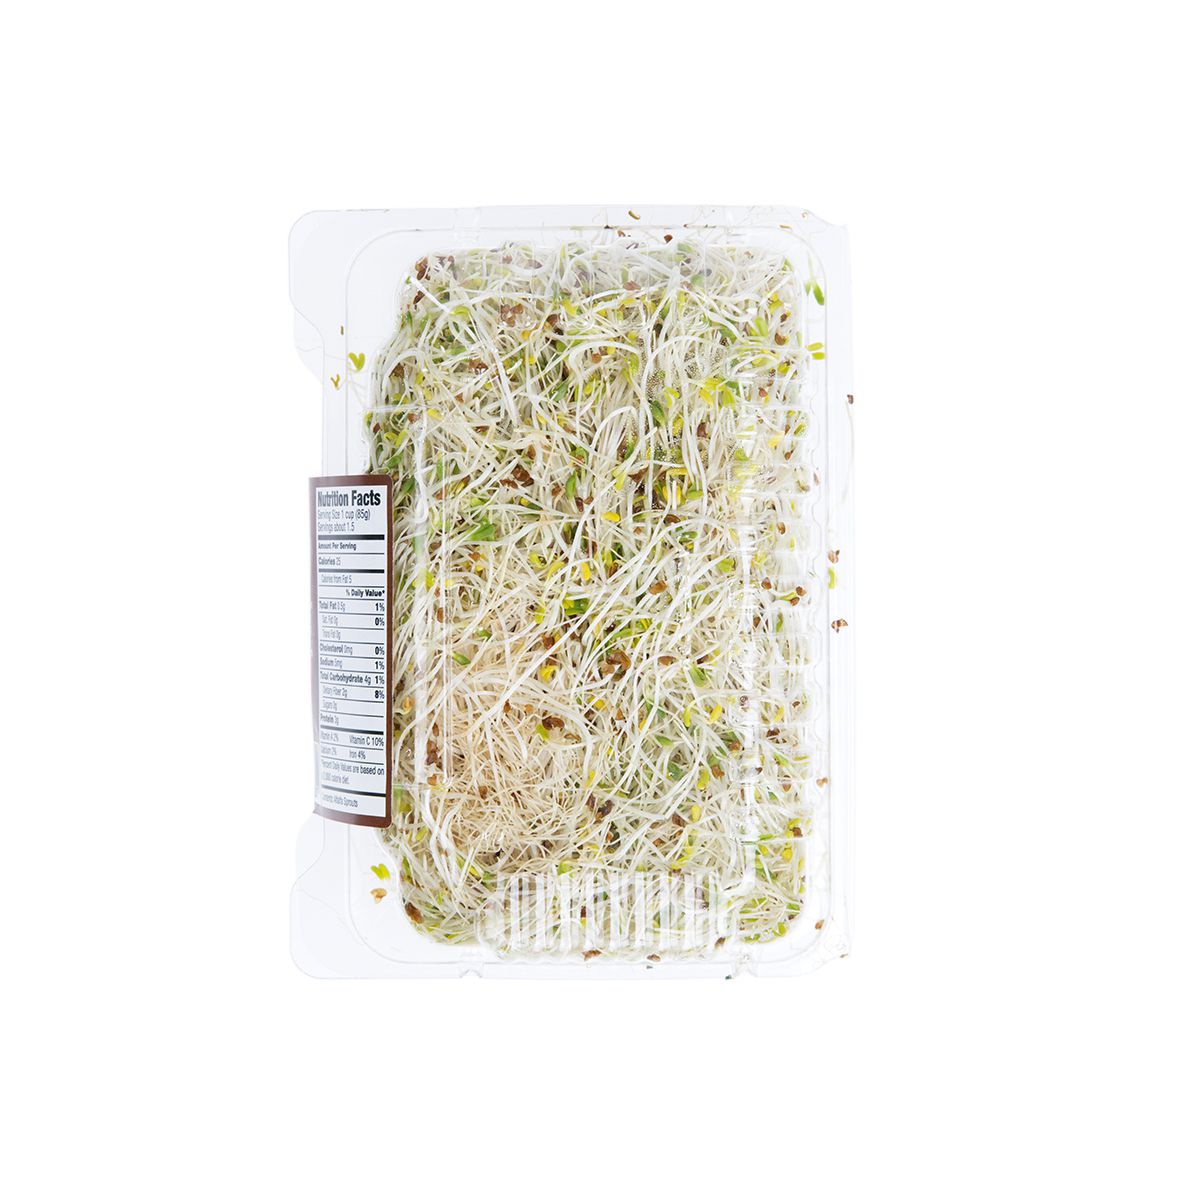 BoxNCase Alfalfa Sprouts Bag